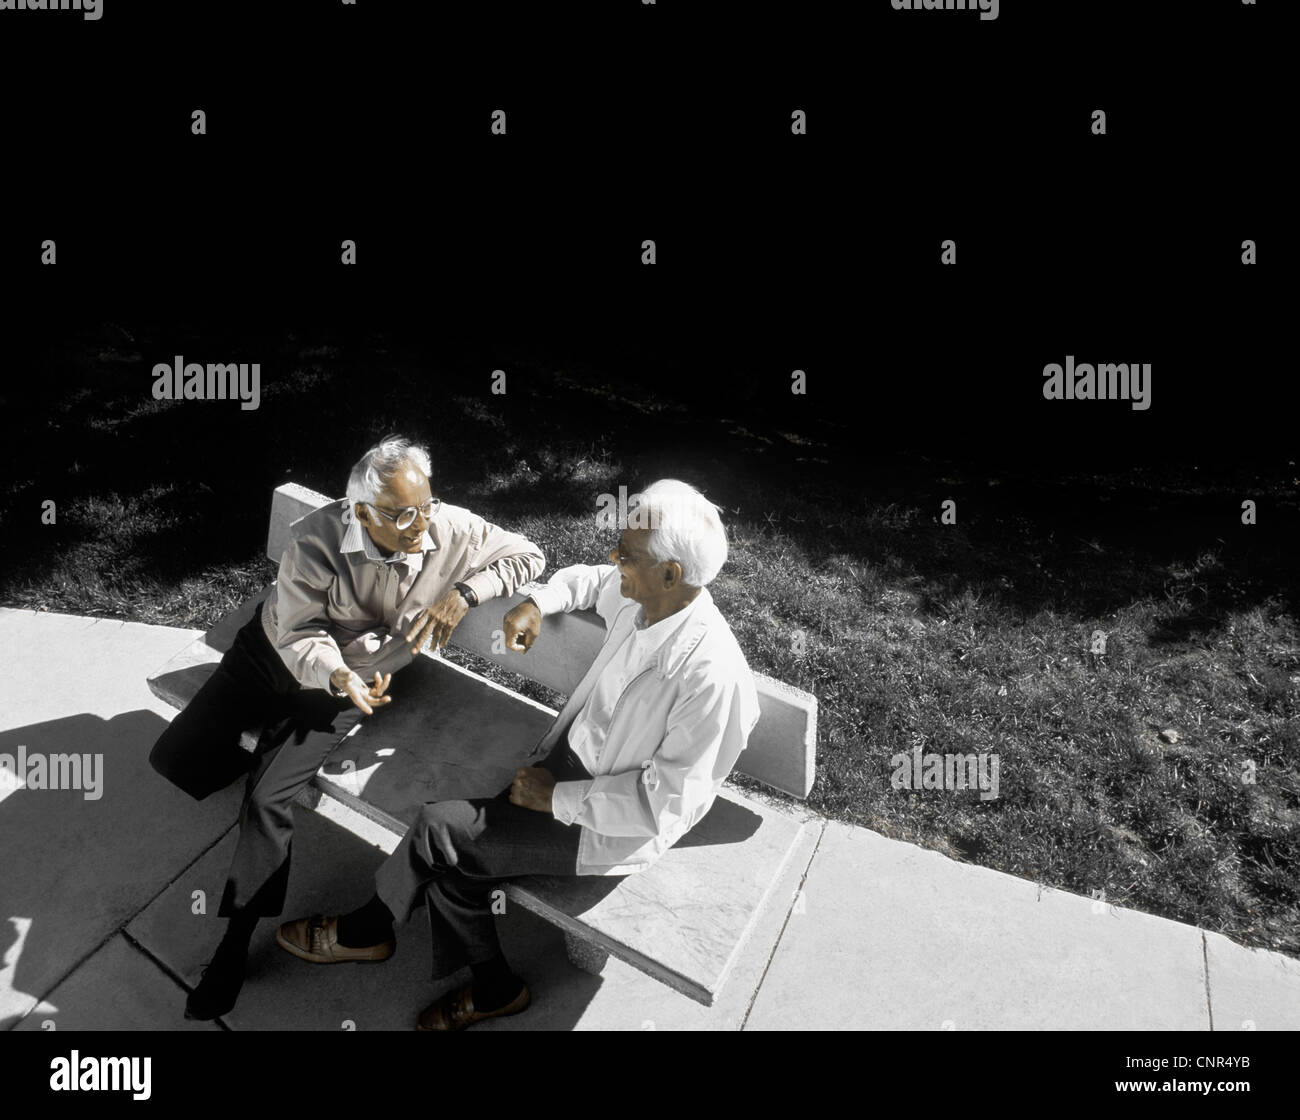 two elderly ethnic men sitting on a bench talking Stock Photo